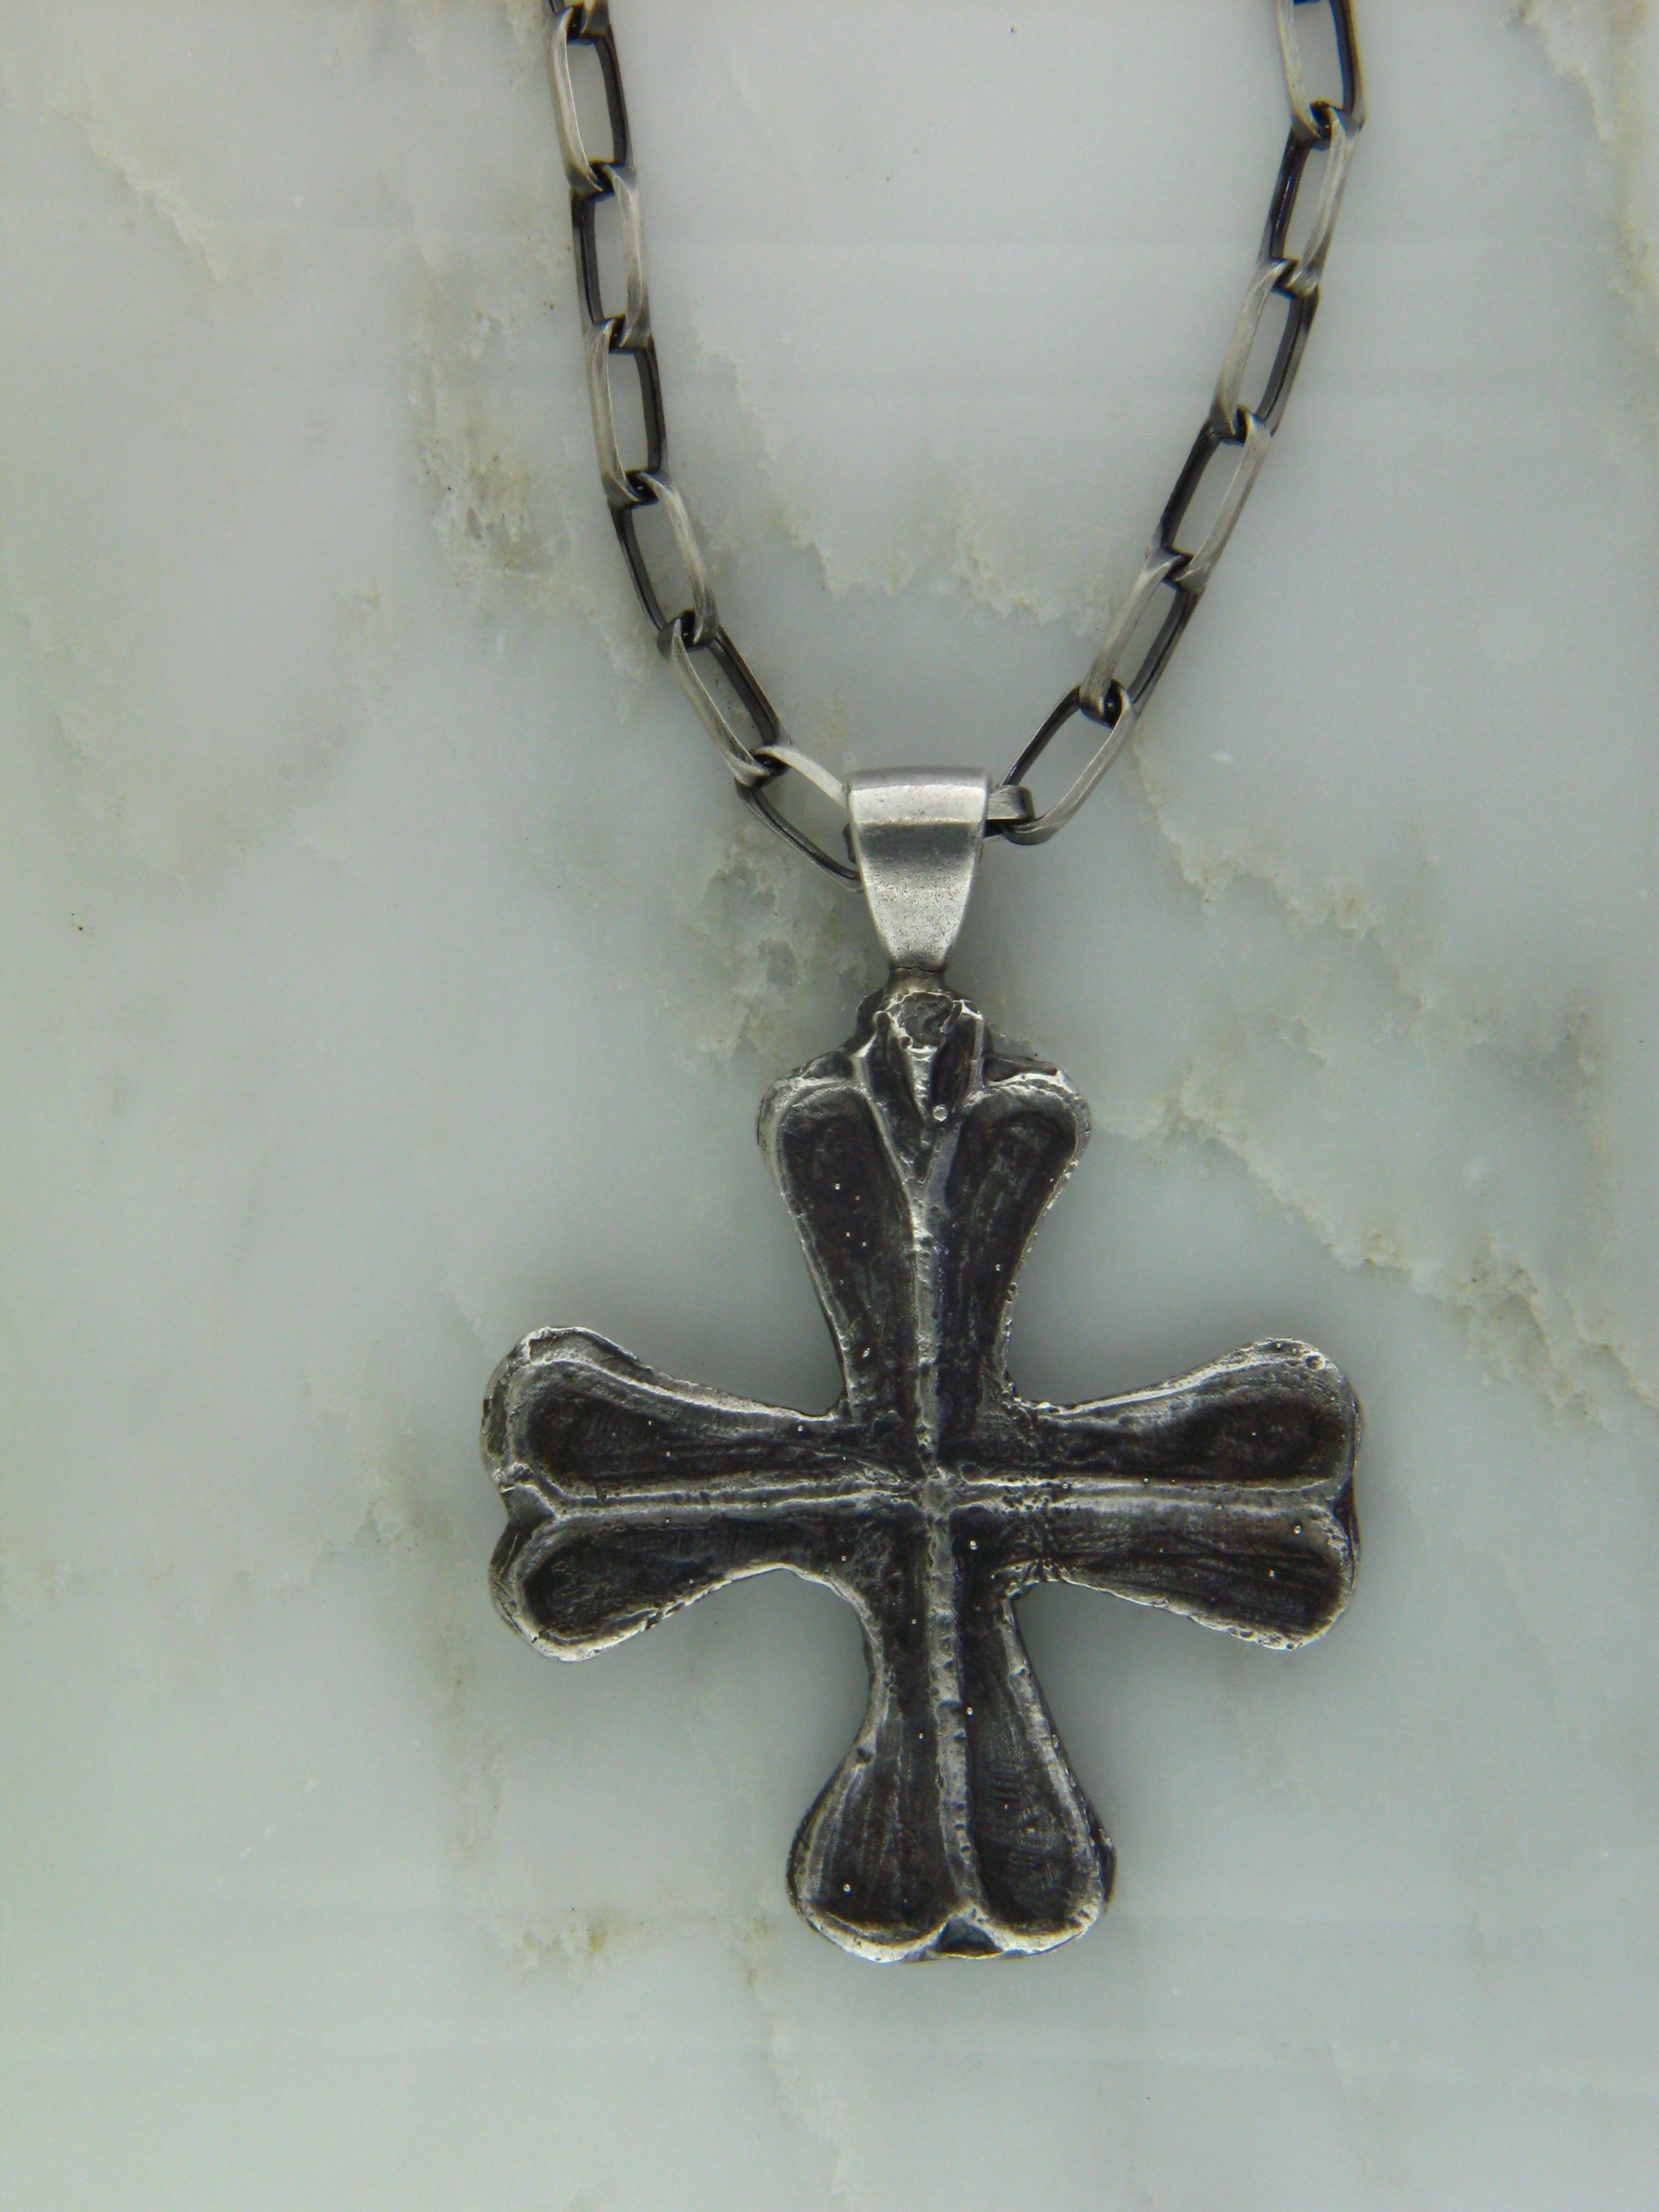 Ancient Cross #01